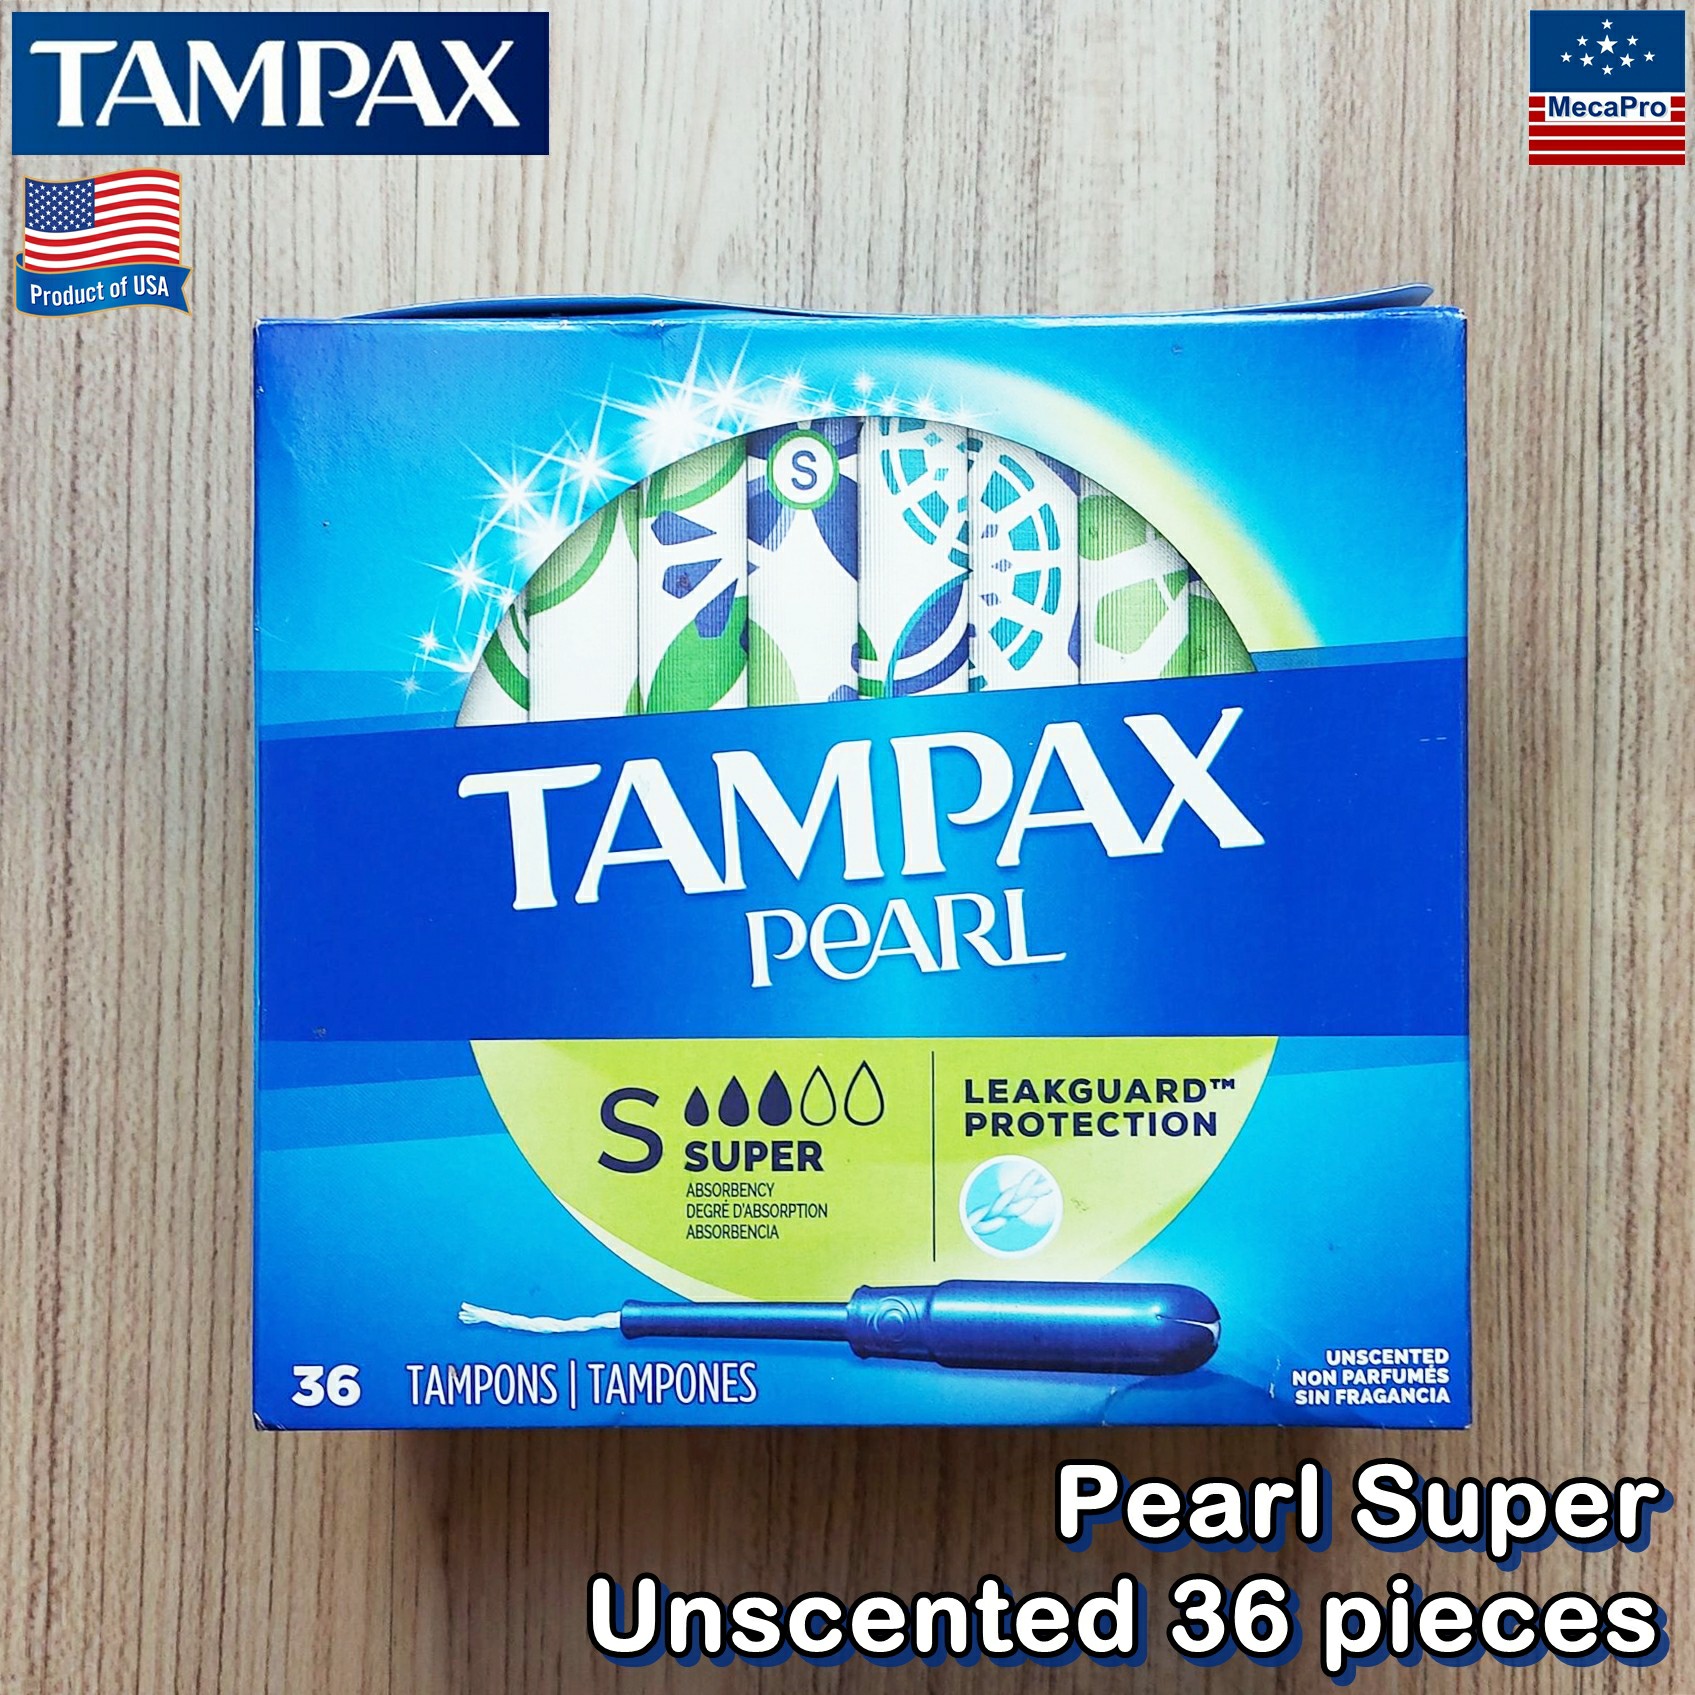 Tampax® Pearl Super Plastic Tampons Unscented 36 pieces ผ้าอนามัยแบบสอด 36 ชิ้น เหมาะกับวันมามาก สูตรไร้กลิ่น